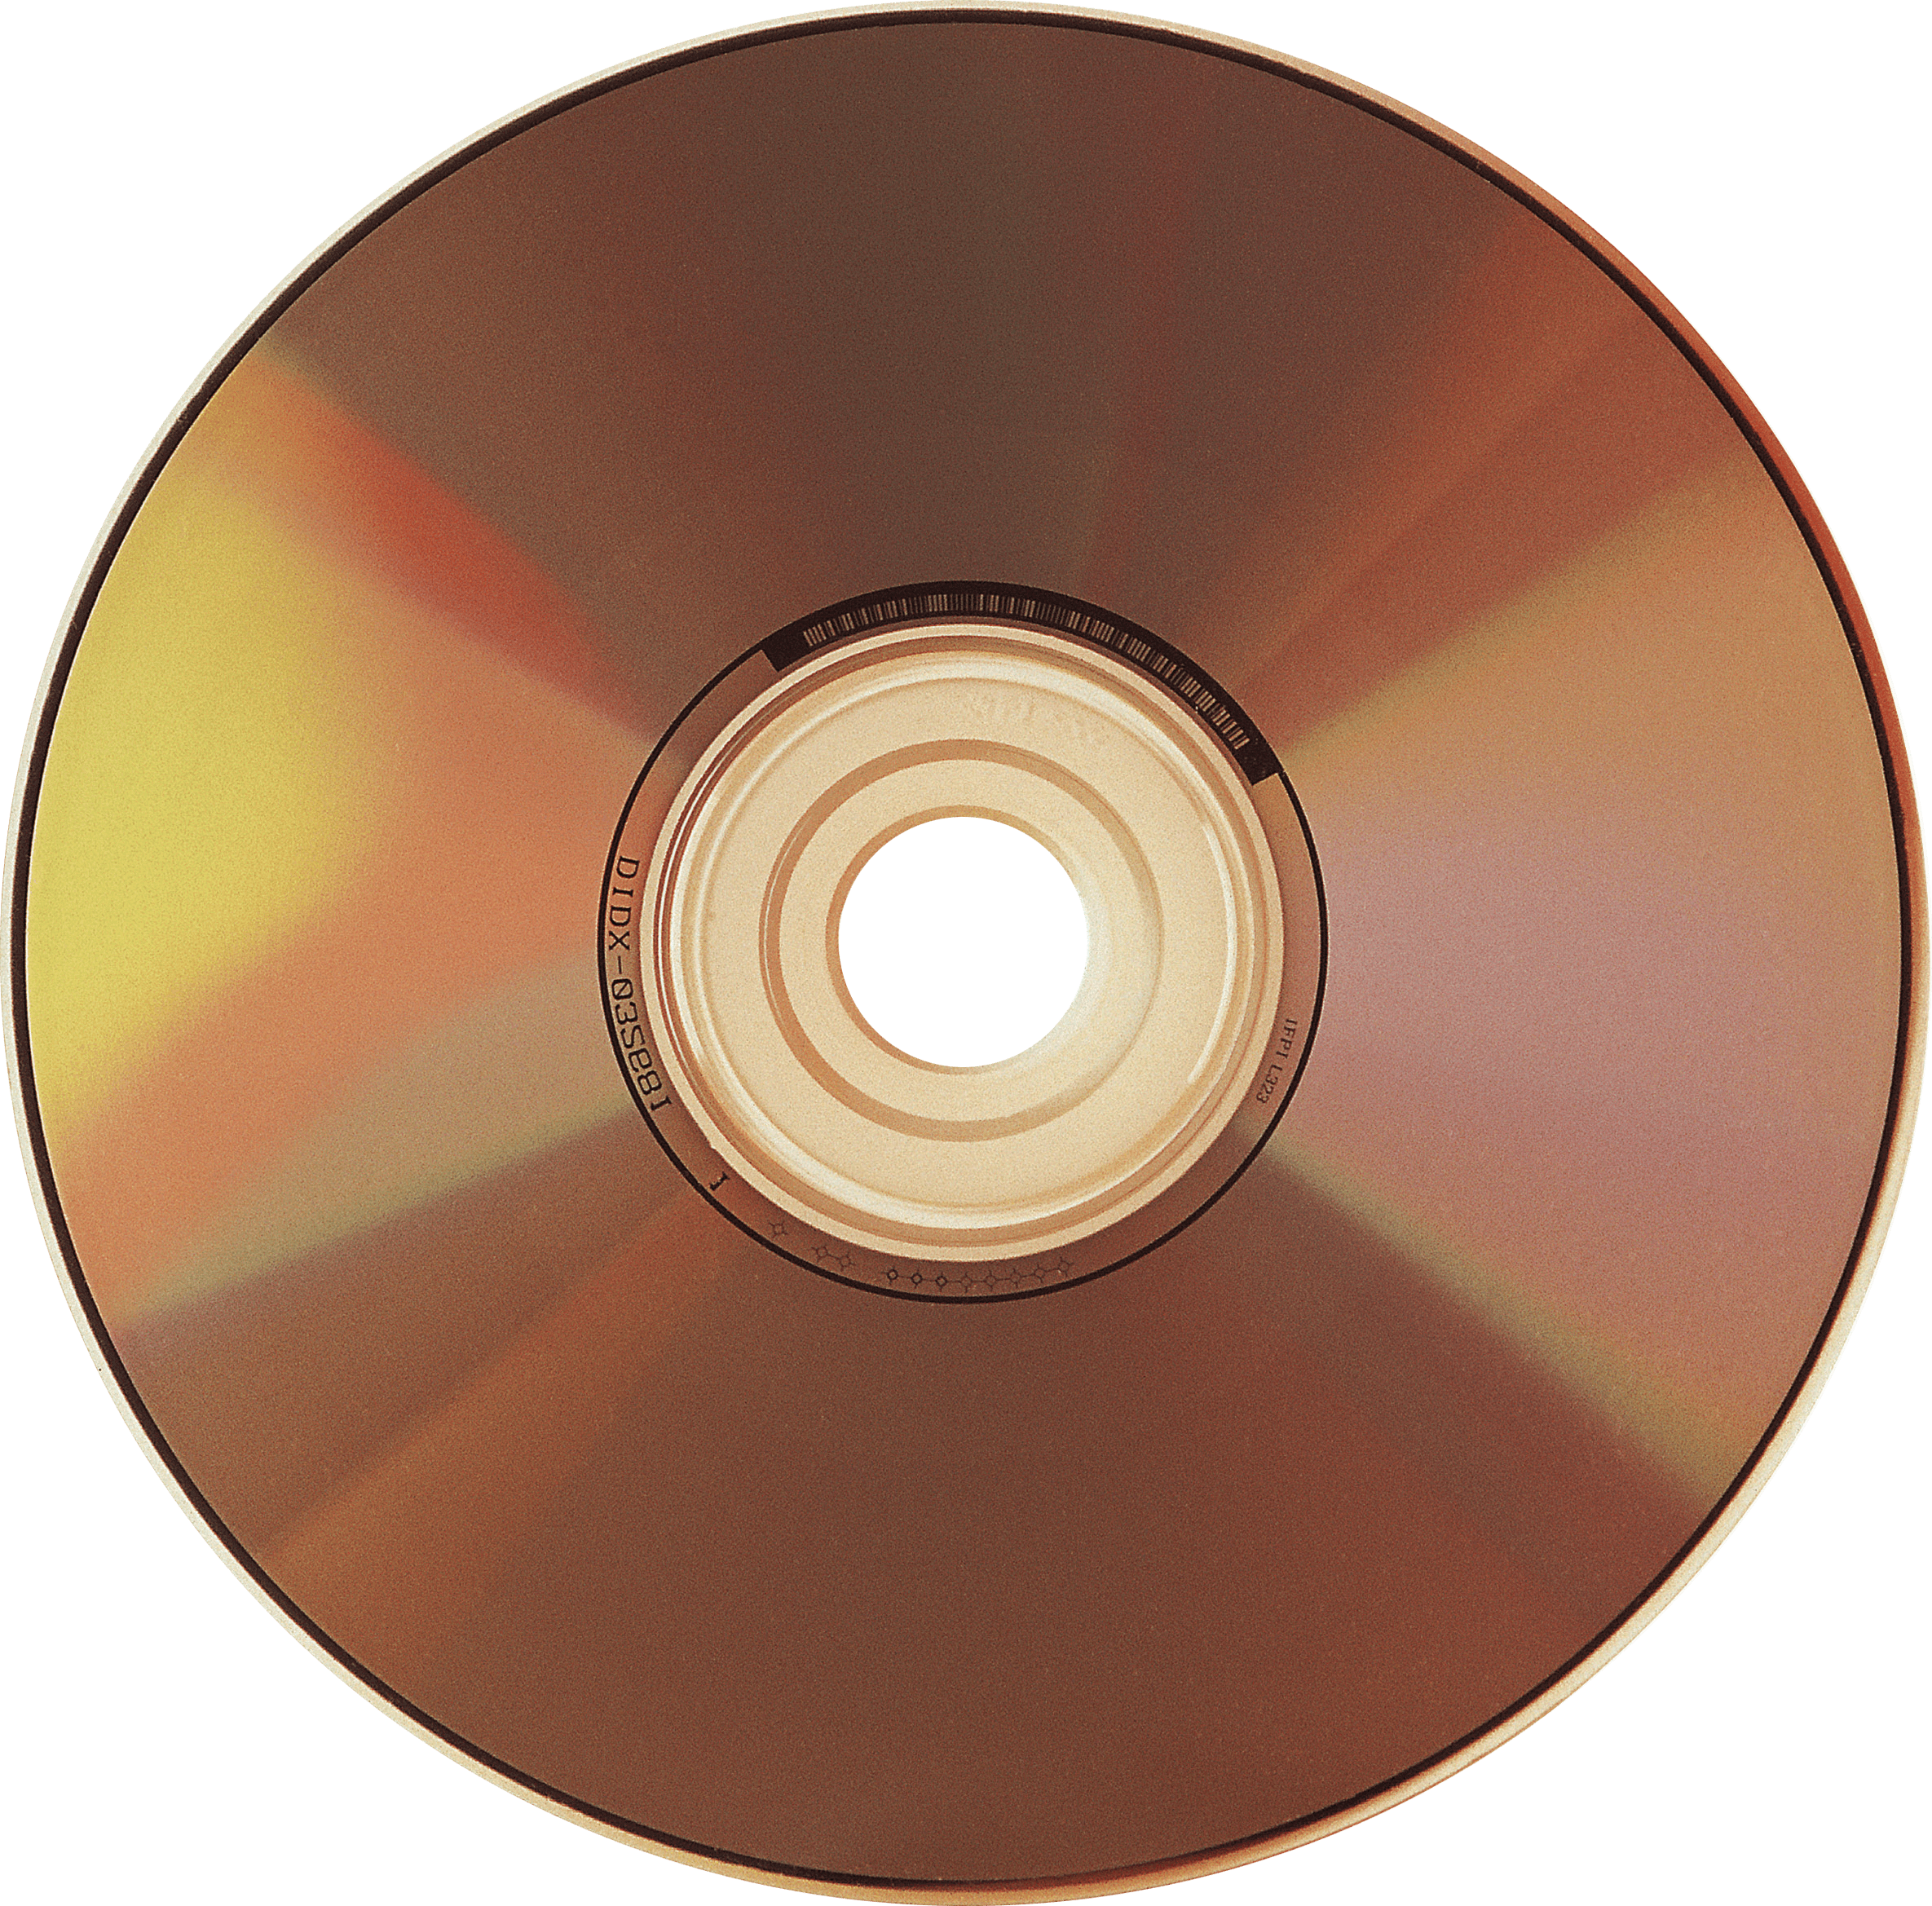 Cd фото. CD - Compact Disk (компакт диск). CD (Compact Disc) — оптический носитель. CD-R DVD. CD-R (Compact Disk Recorder).